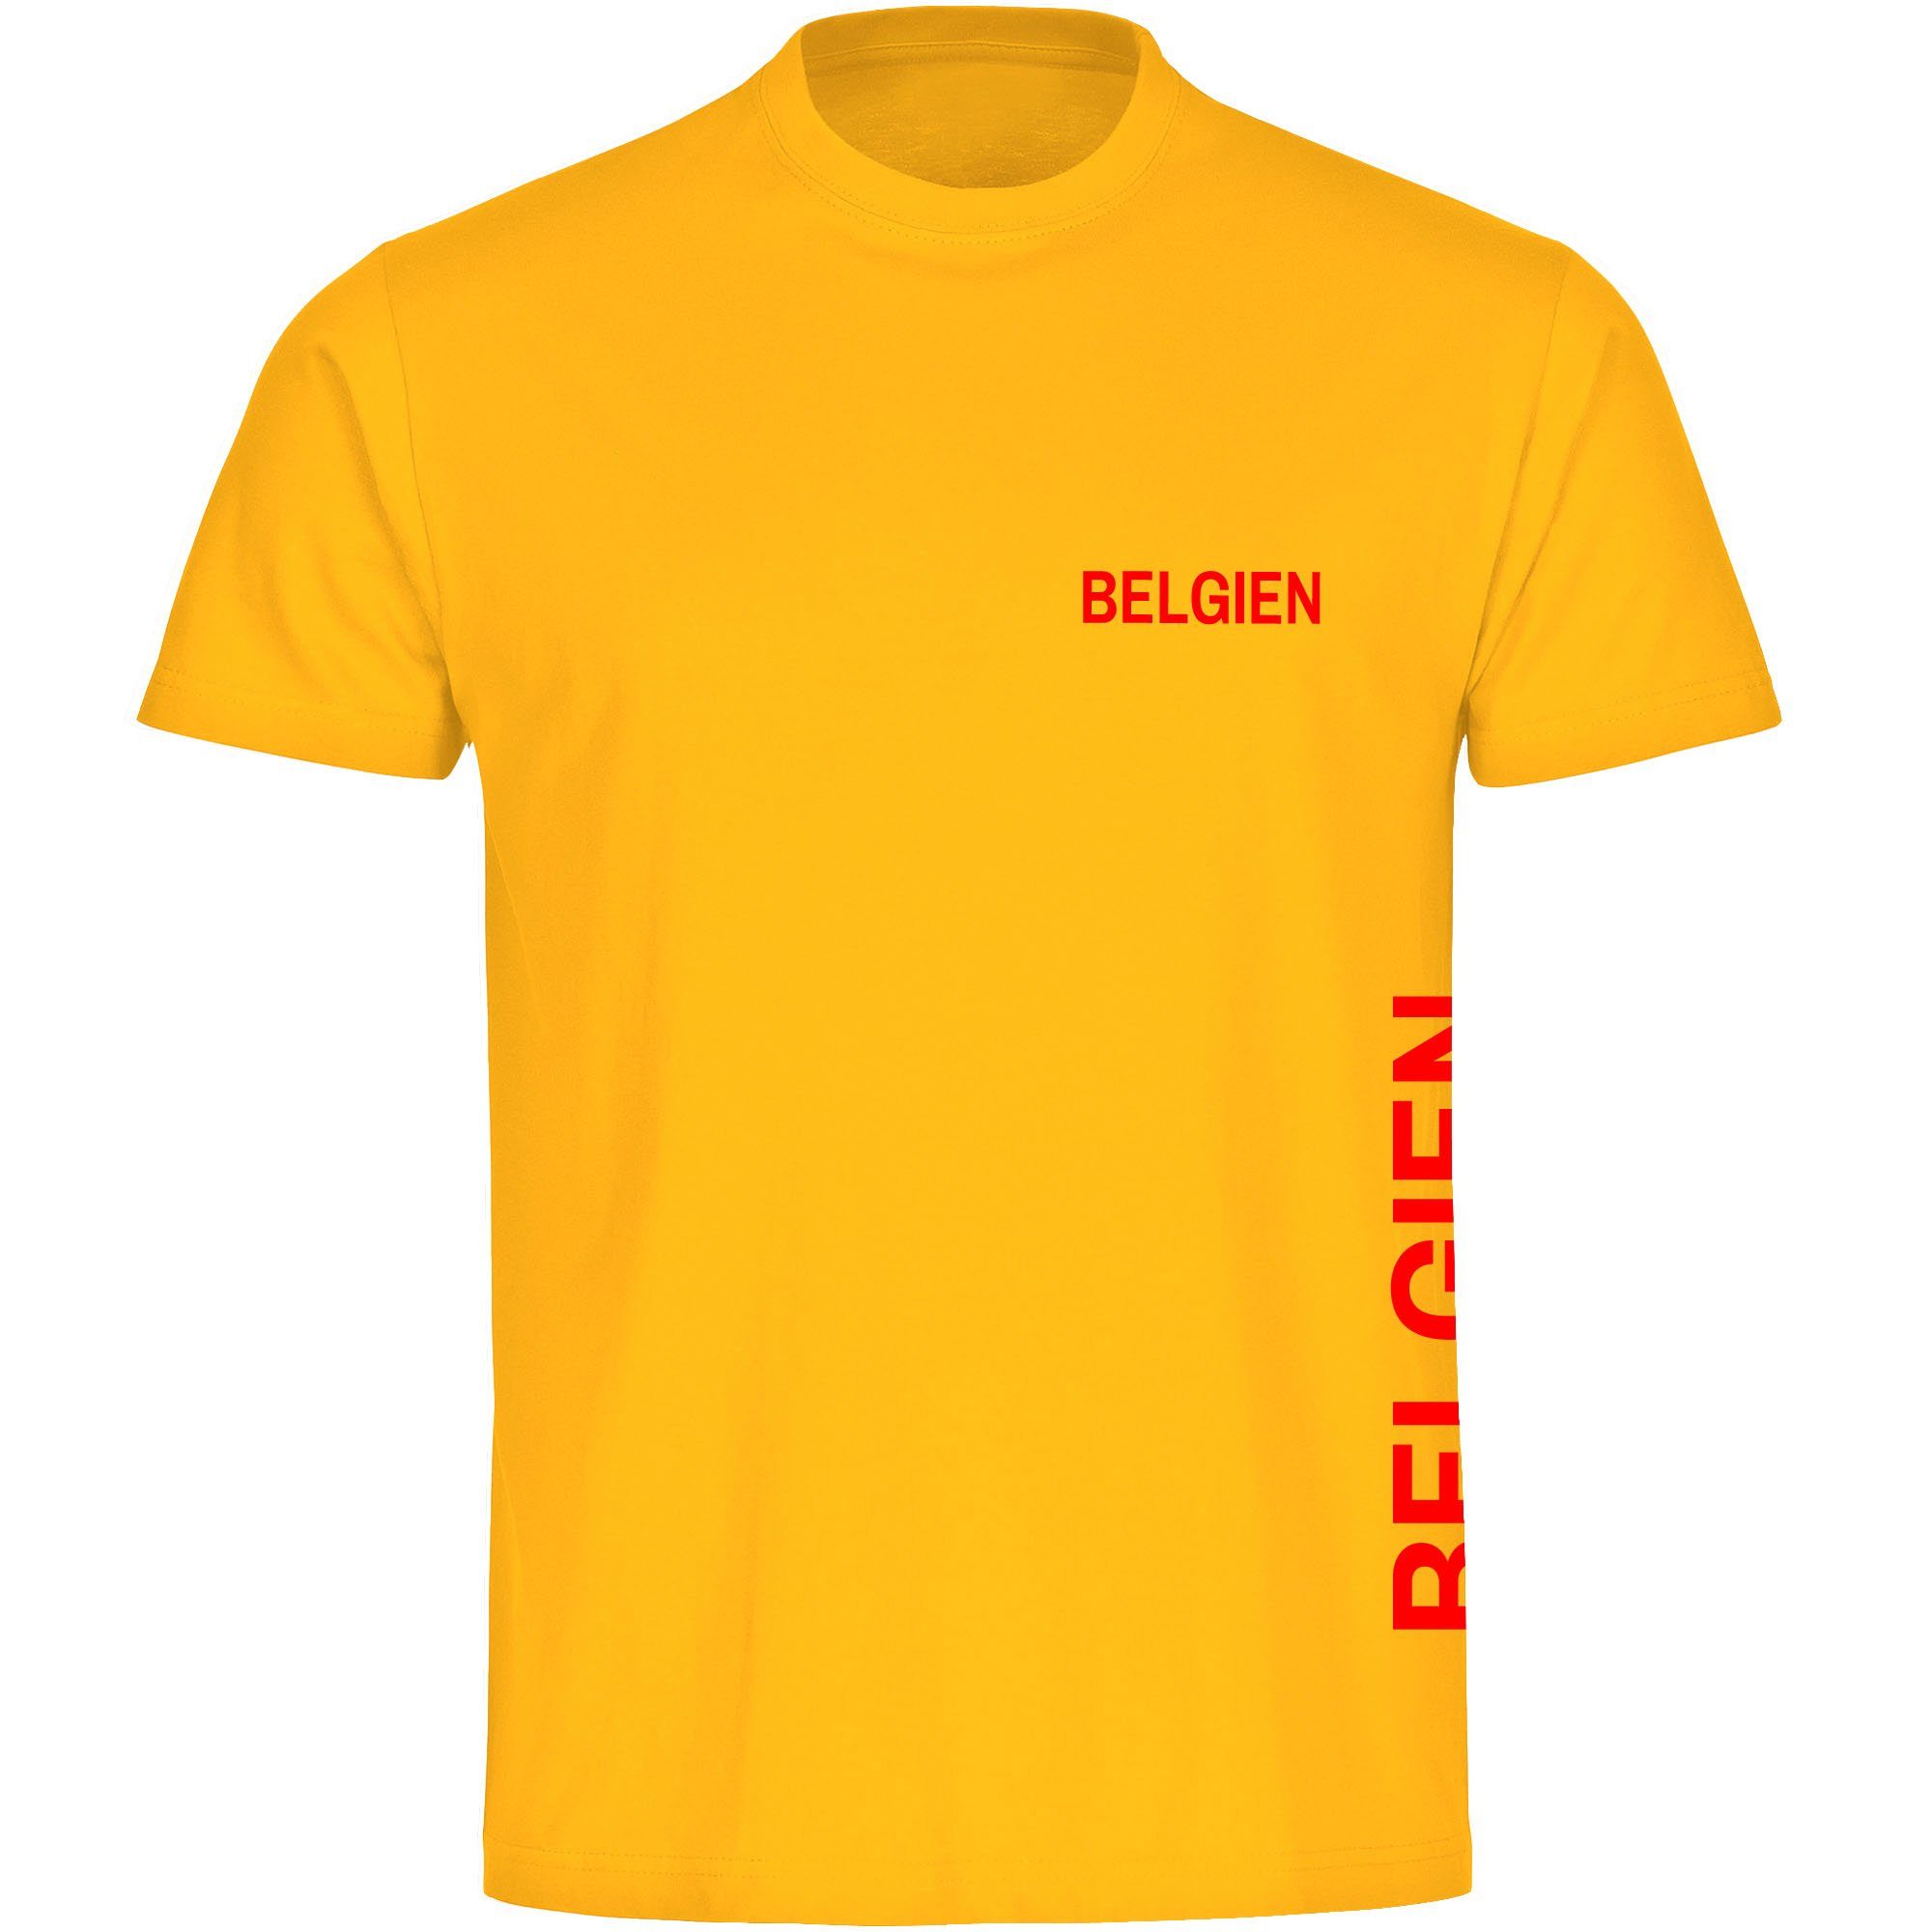 multifanshop T-Shirt Herren Belgien - Brust & Seite - Männer